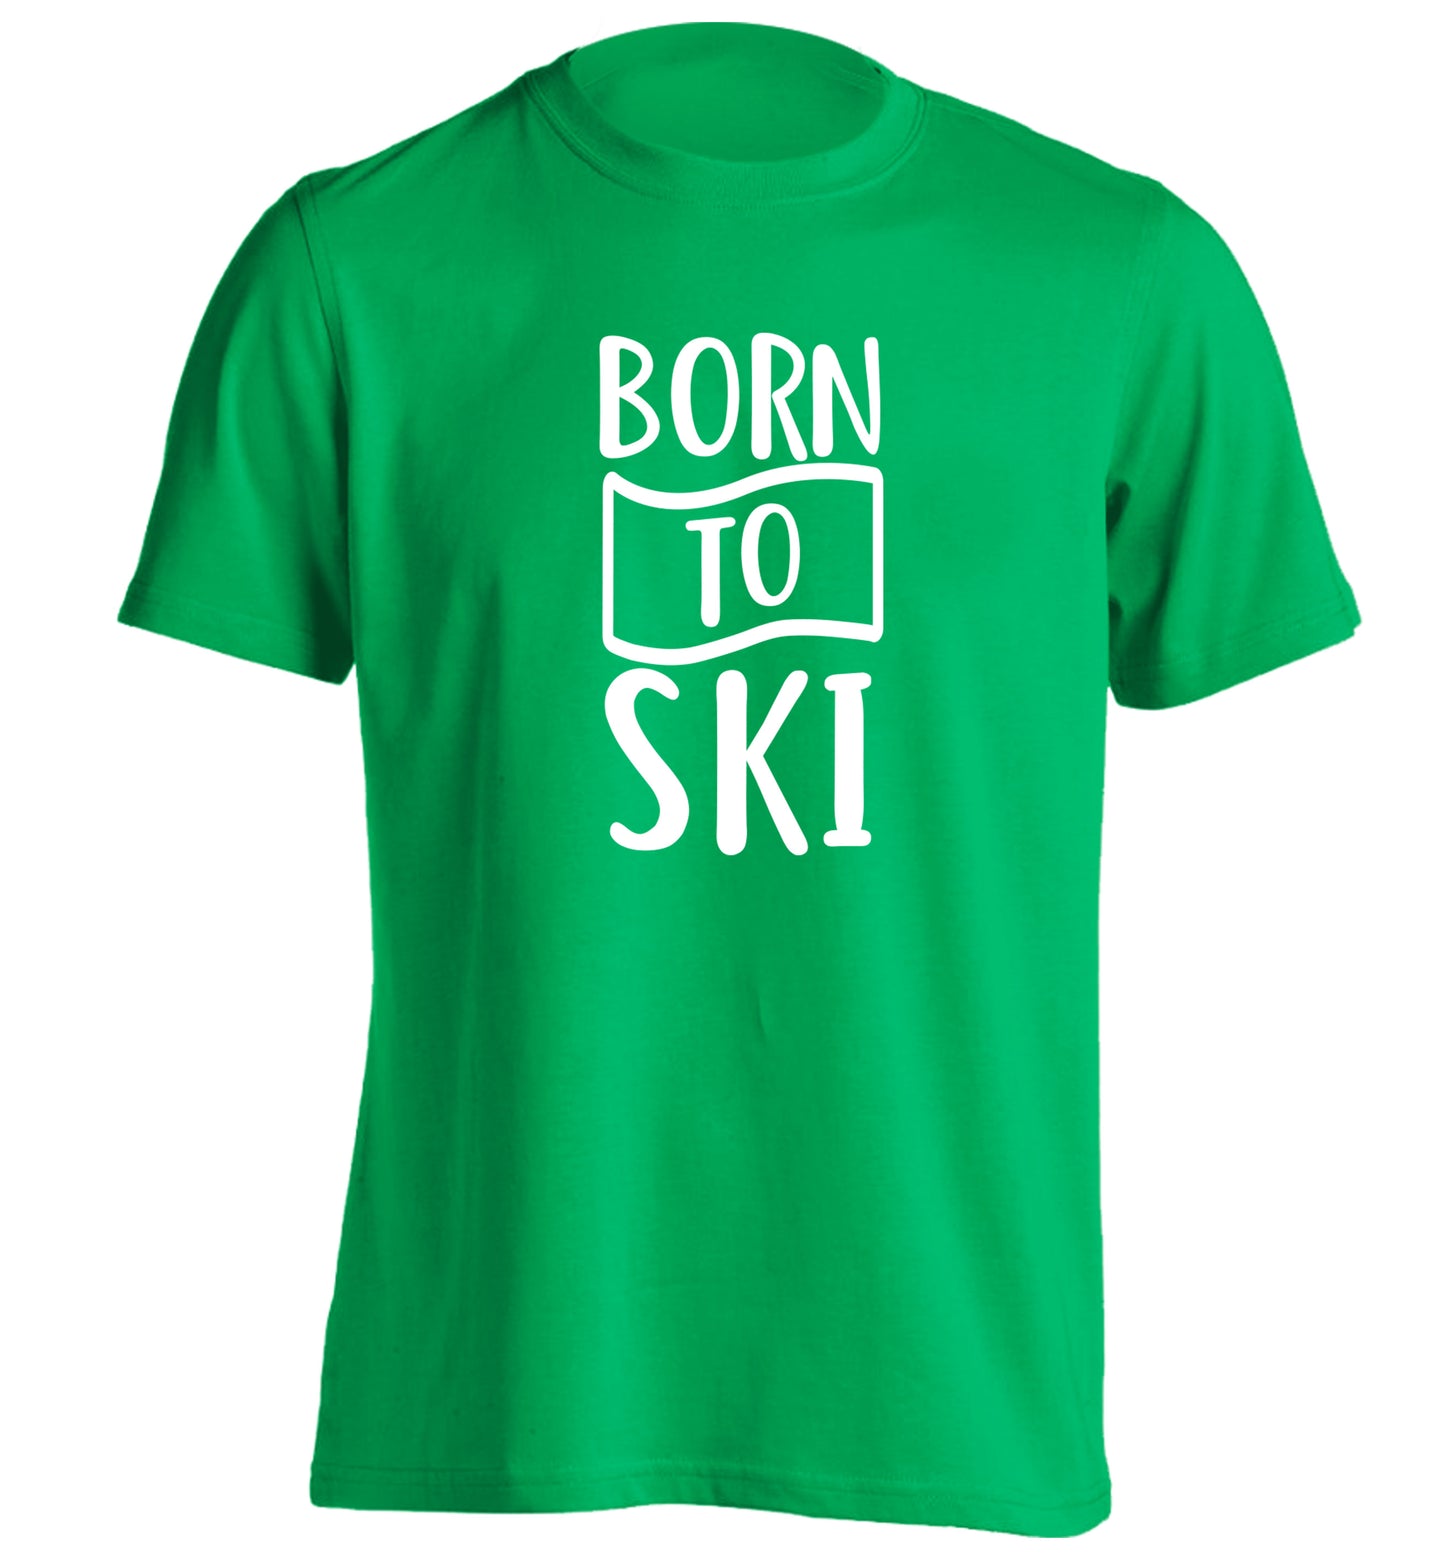 Born to ski adults unisexgreen Tshirt 2XL